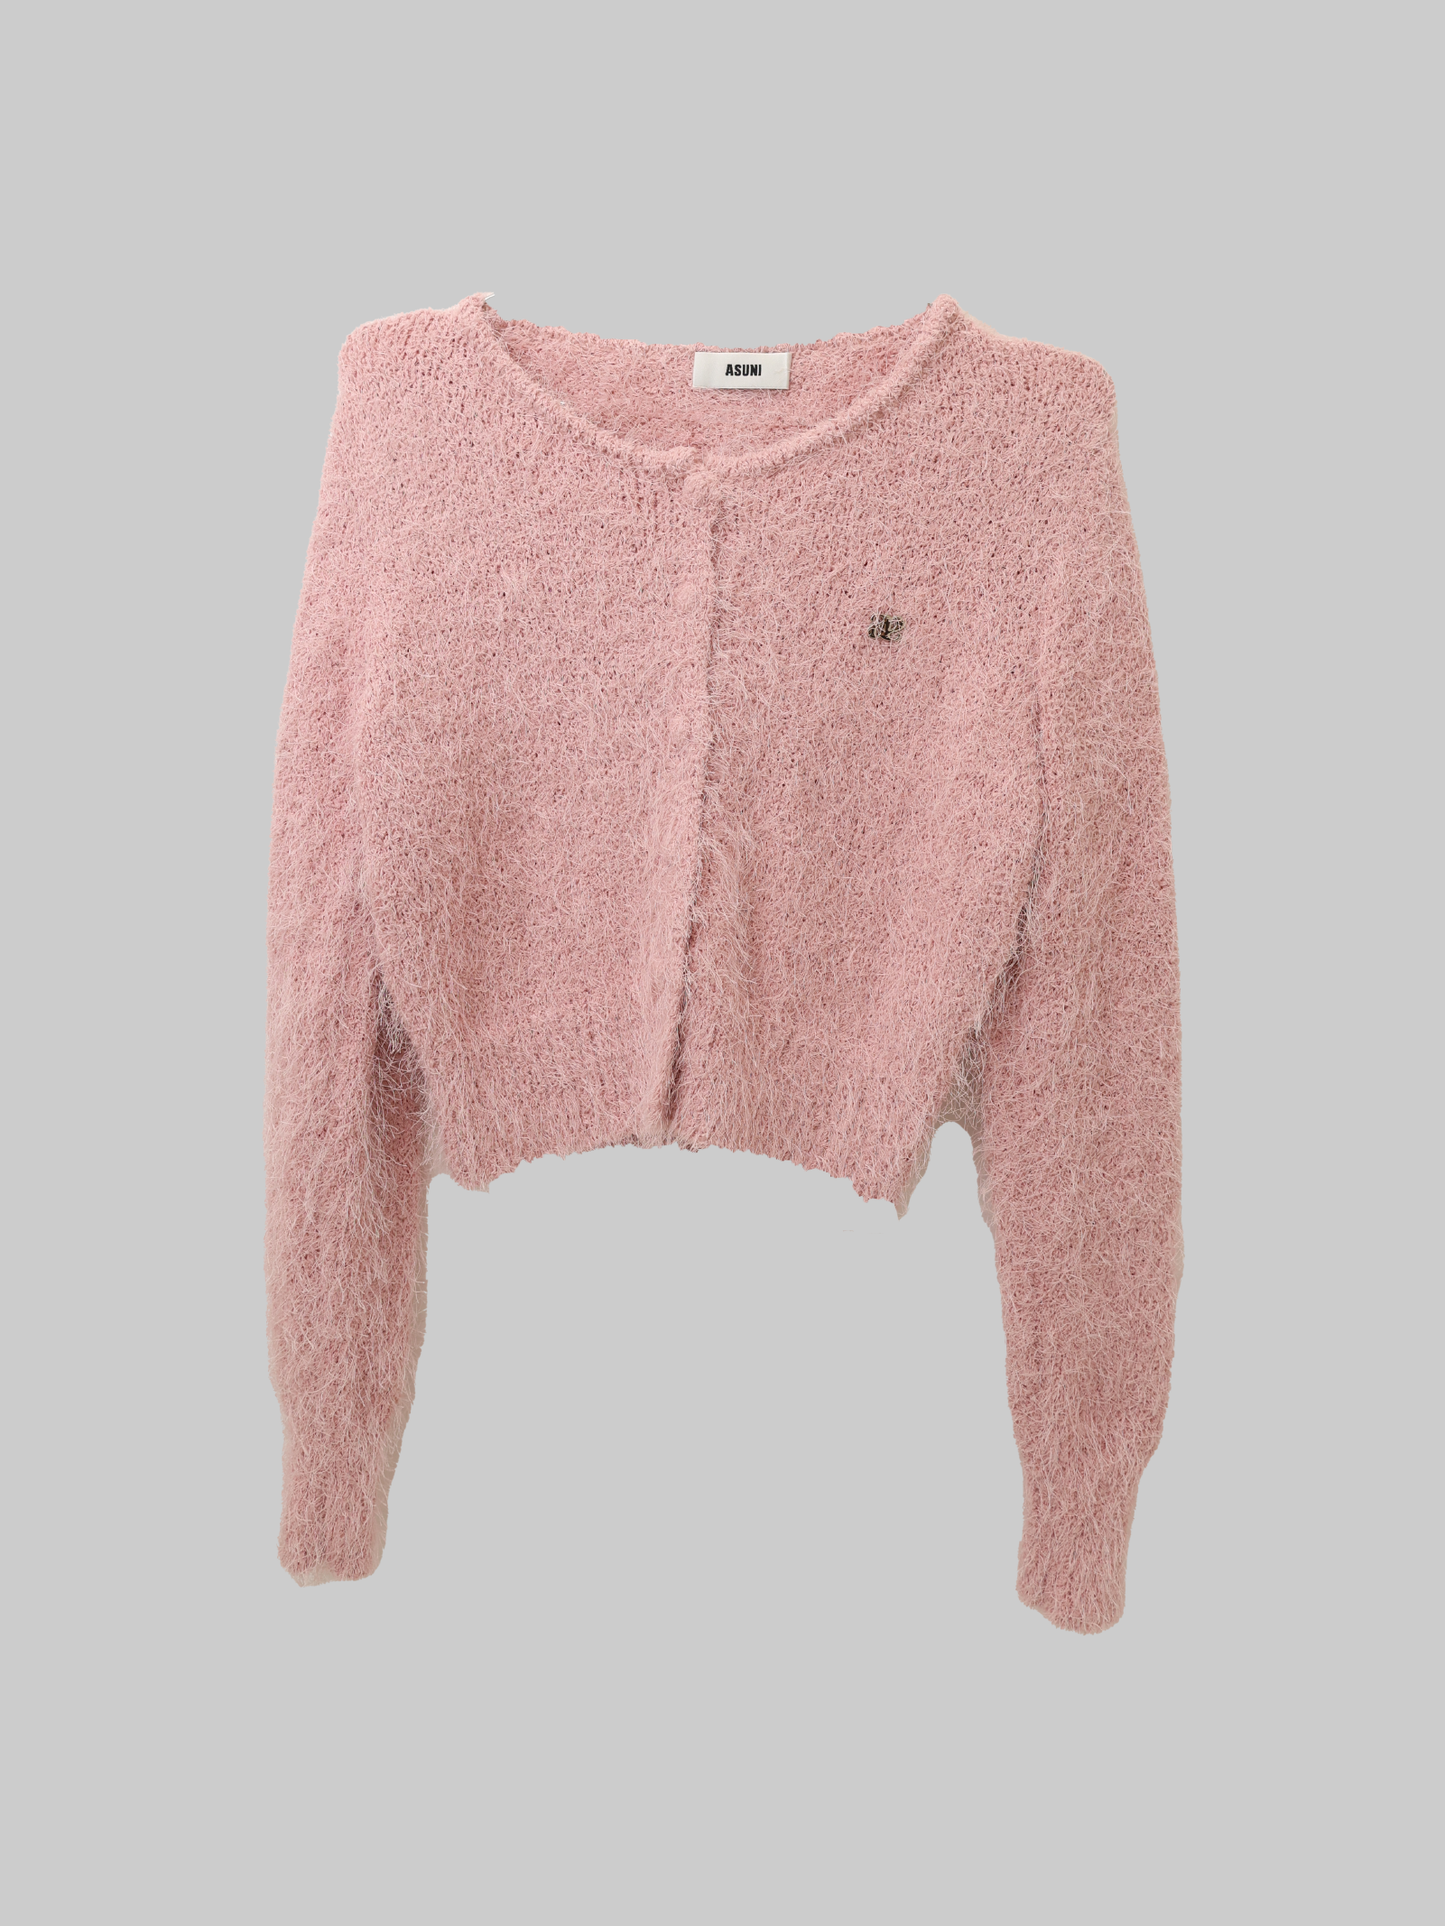 asuni Fluffy Knit Cardigan Sweater in Pink